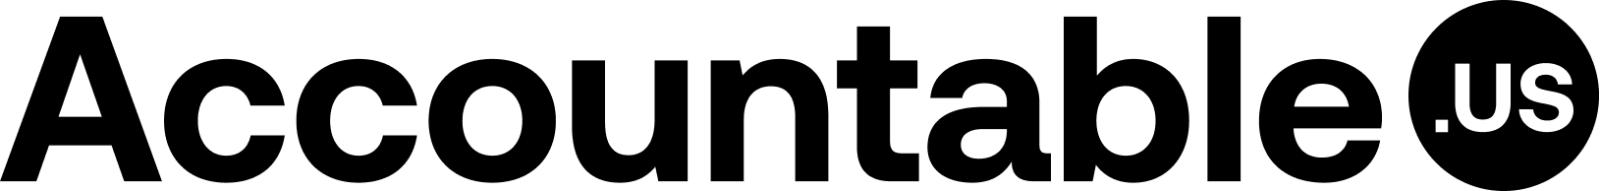 RGB-AccountableUS-Stratos-Logo.png